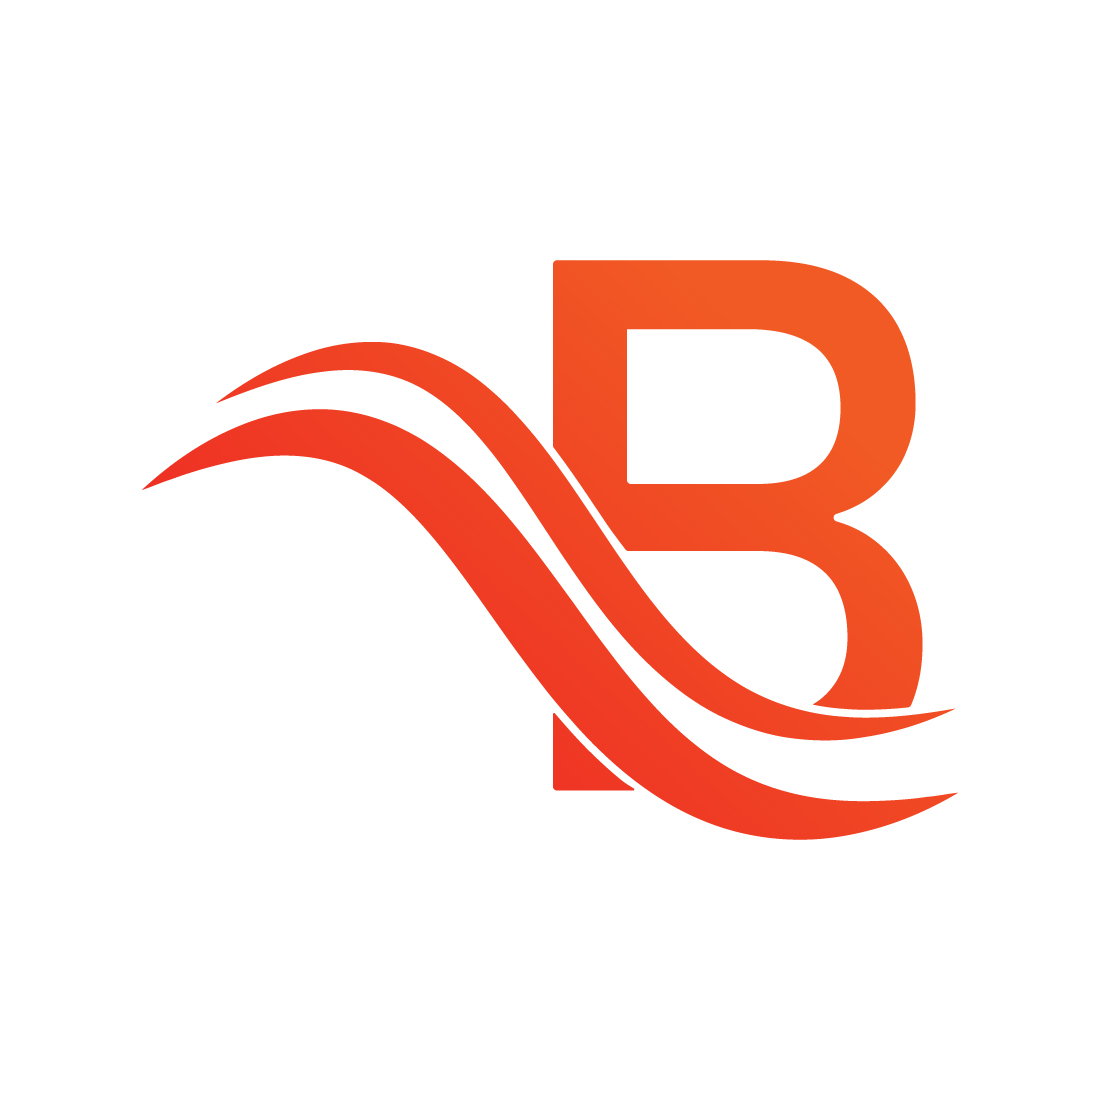 Initials B letter logo design vector images B logo design template vector icon illustration B logo orange color, Premium vector best company identity preview image.